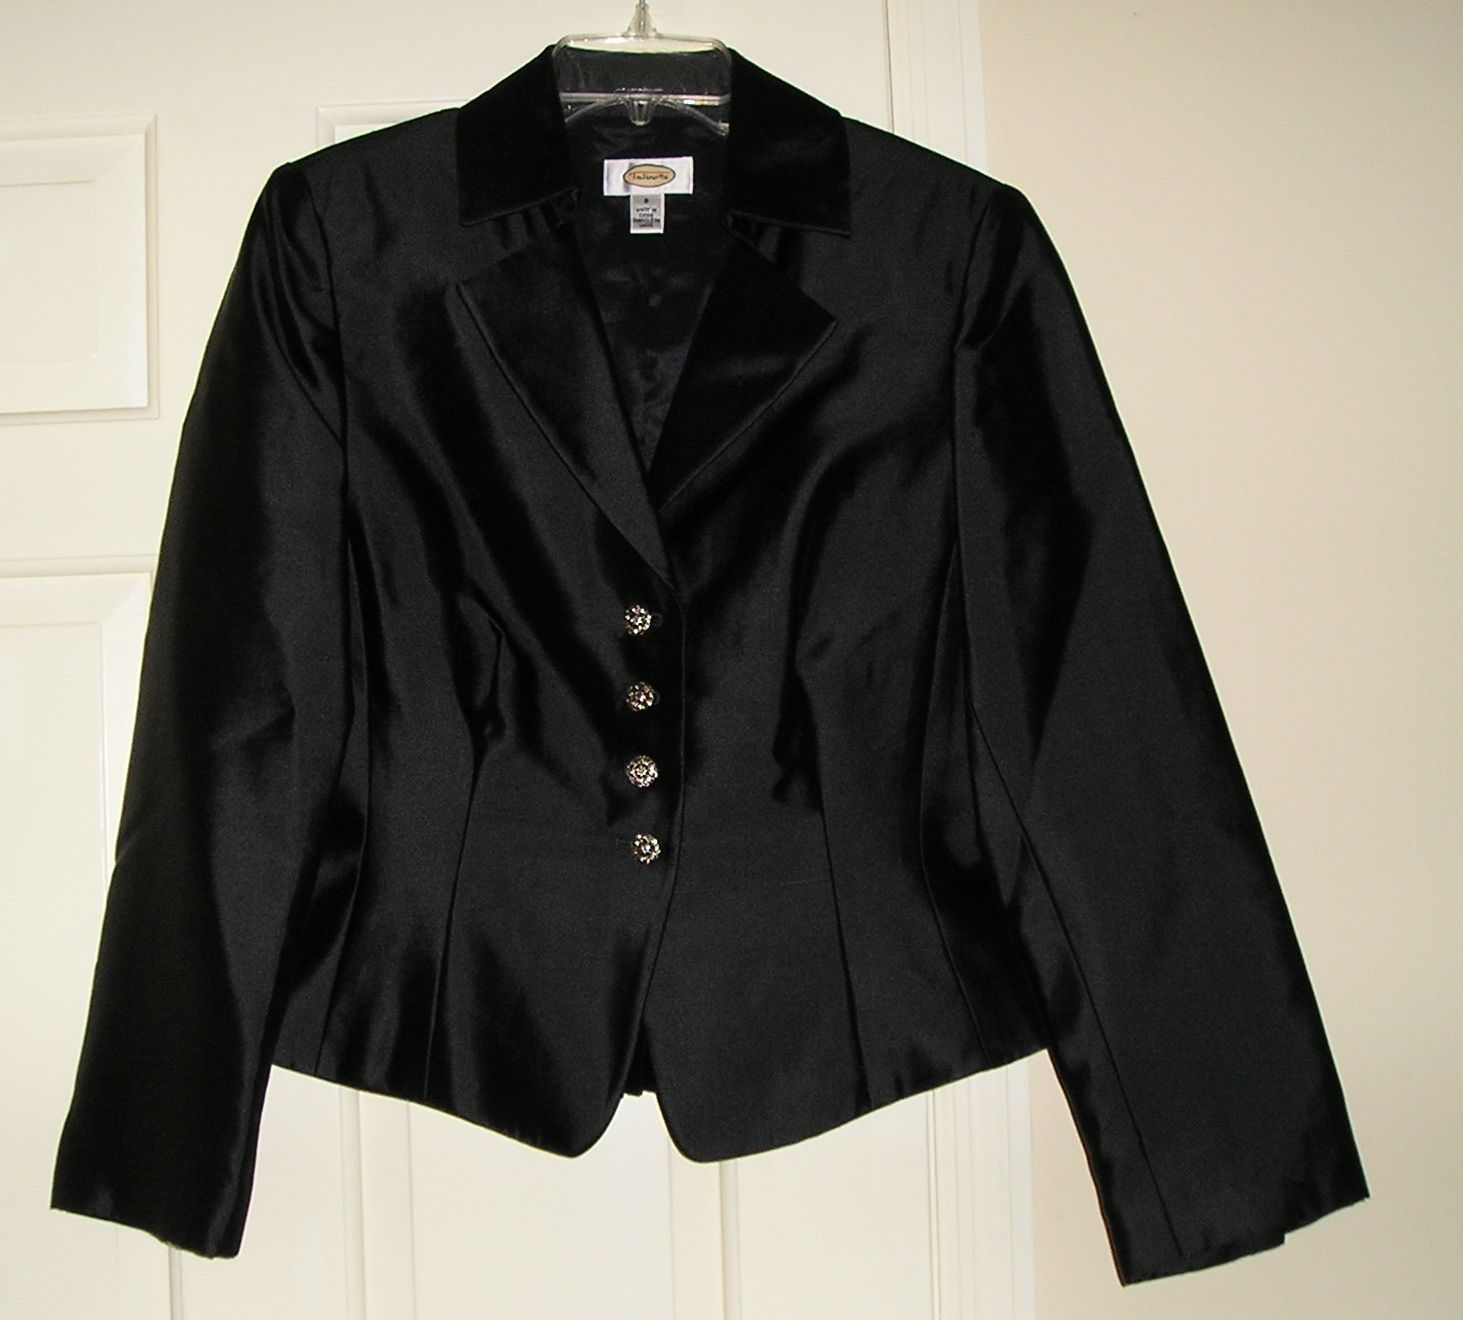 TALBOTS Women's Black Dress Button Blazer Size 8 / Medium M NEW WITHOUT TAG - $39.99